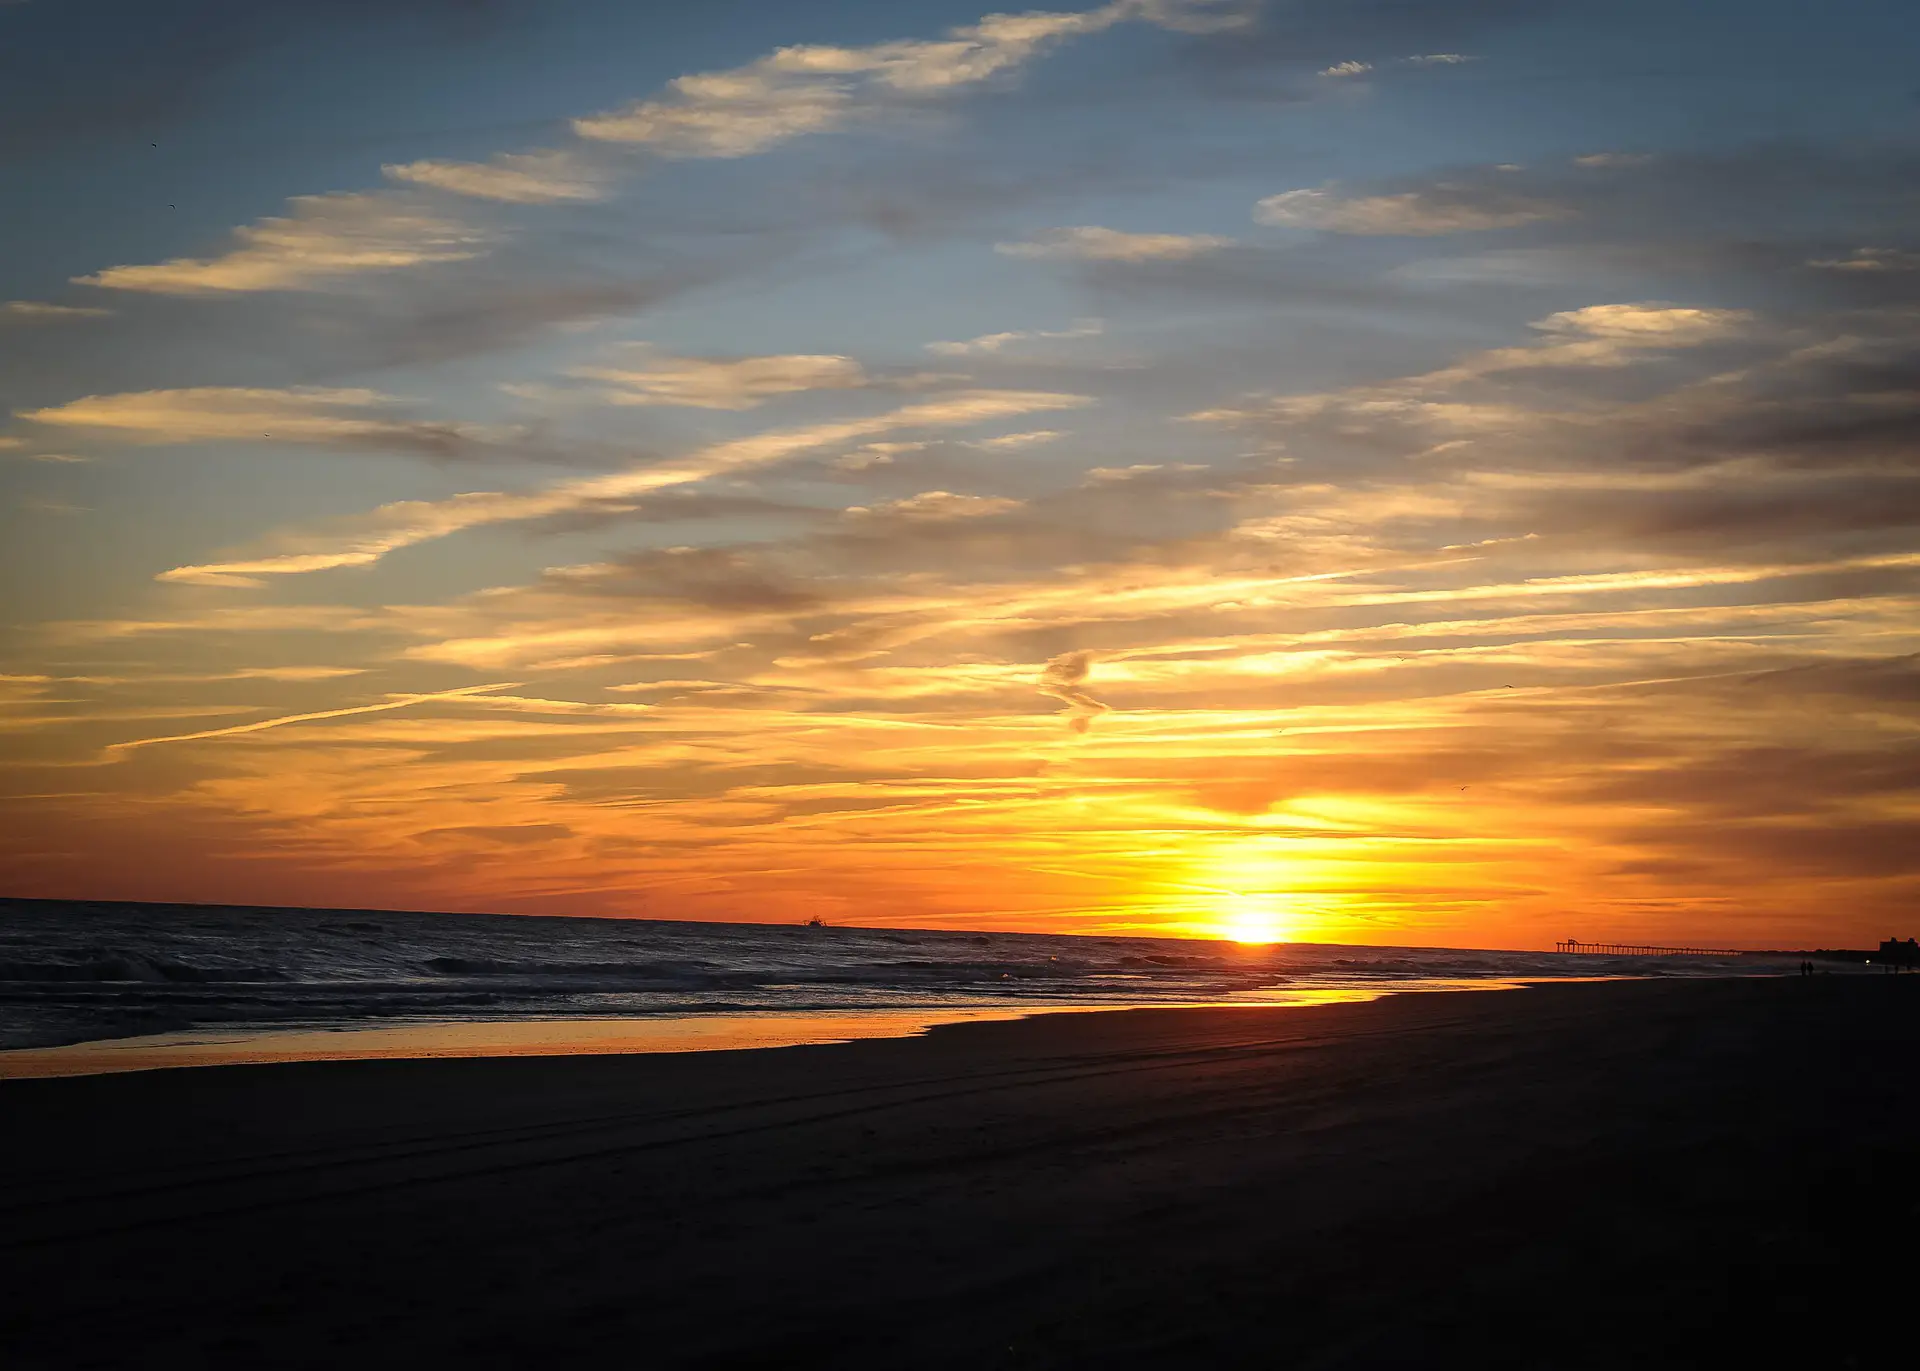 Enjoy the sunsets at Sunset Beach North Carolina